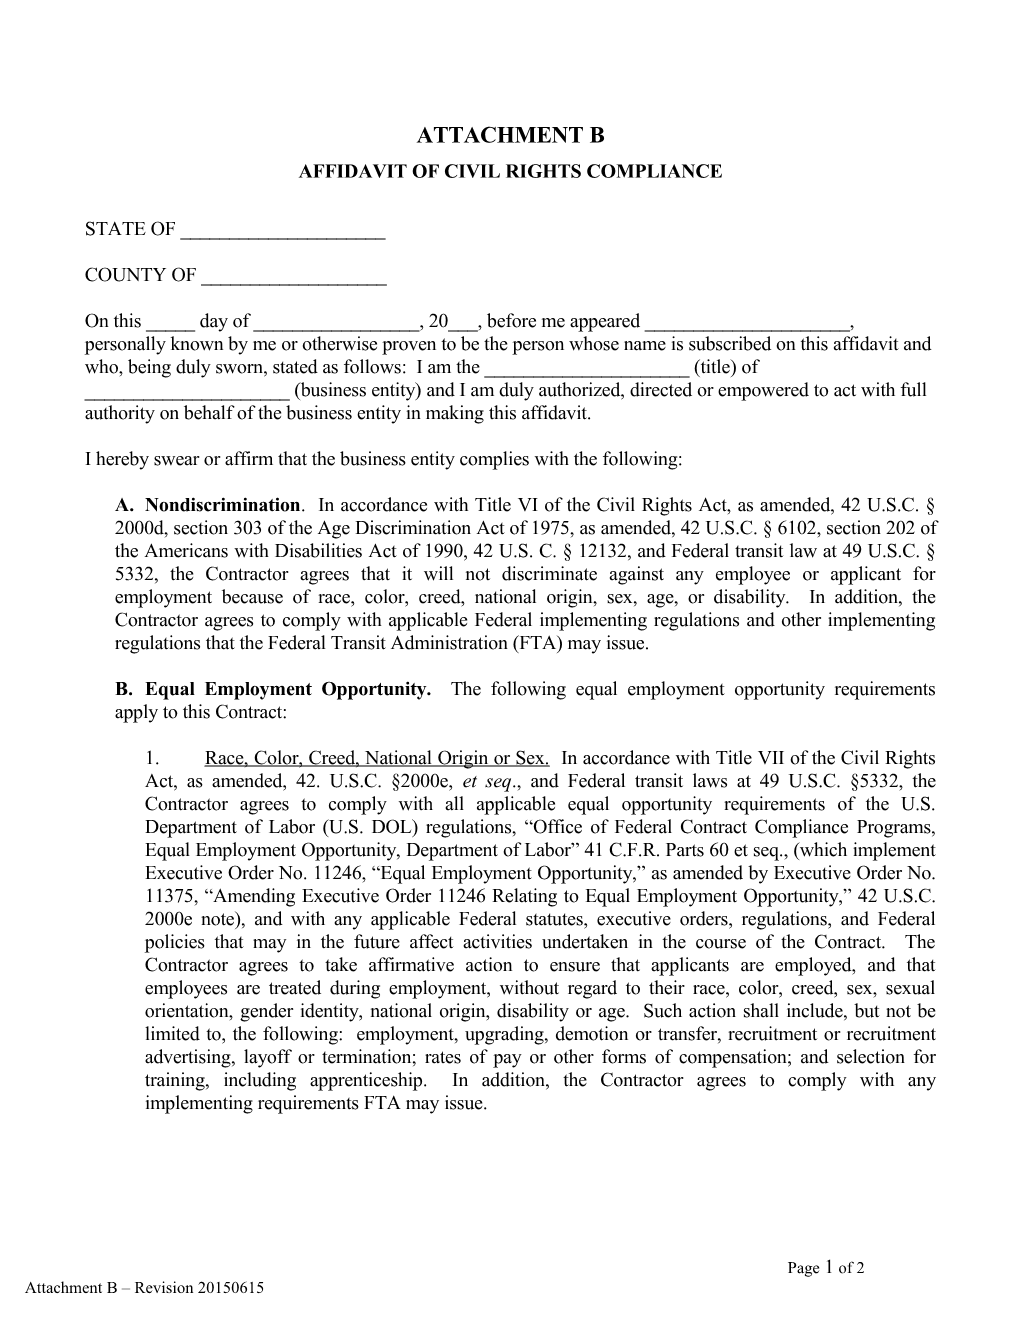 Affidavit of Civil Rights Compliance